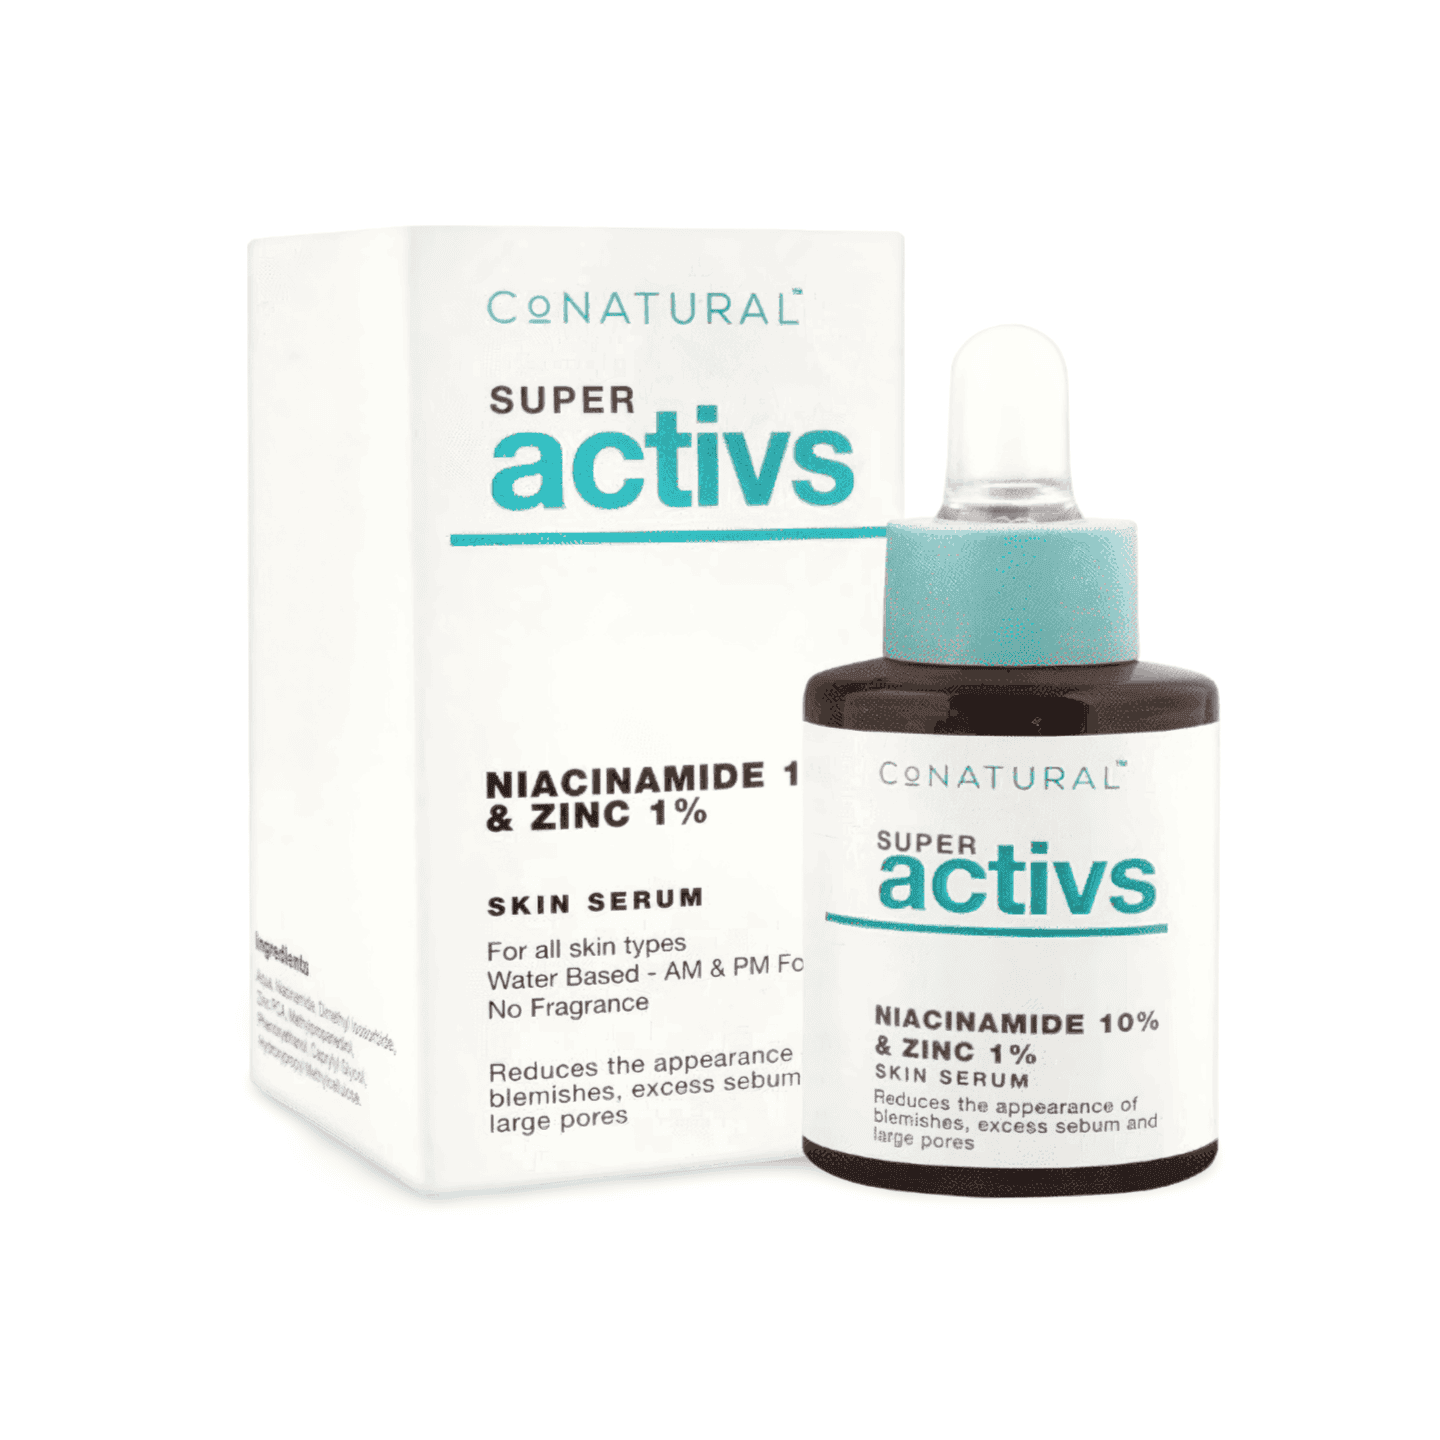 Conatural Super Activs Niacinamide 10% & Zinc 1% Skin Serum